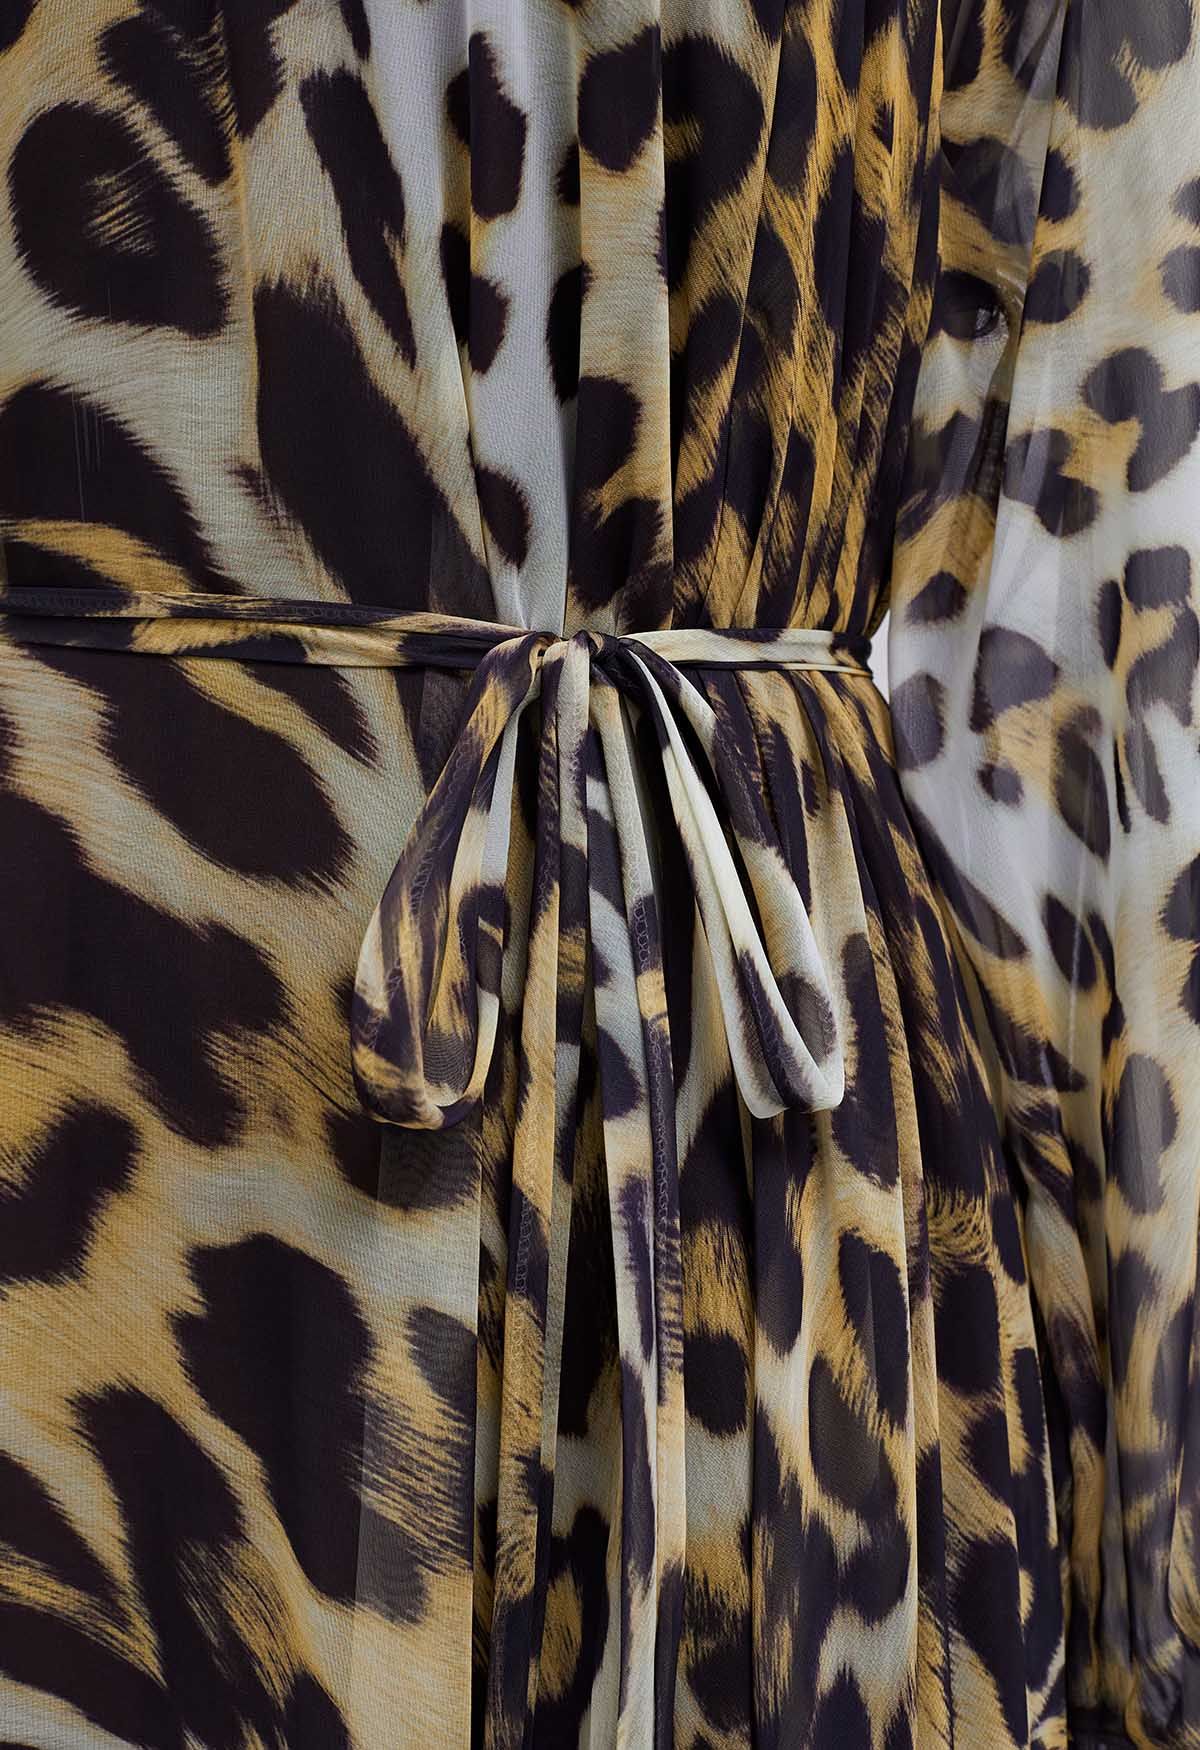 Alluring Animal Print Long-Sleeve Chiffon Maxi Dress